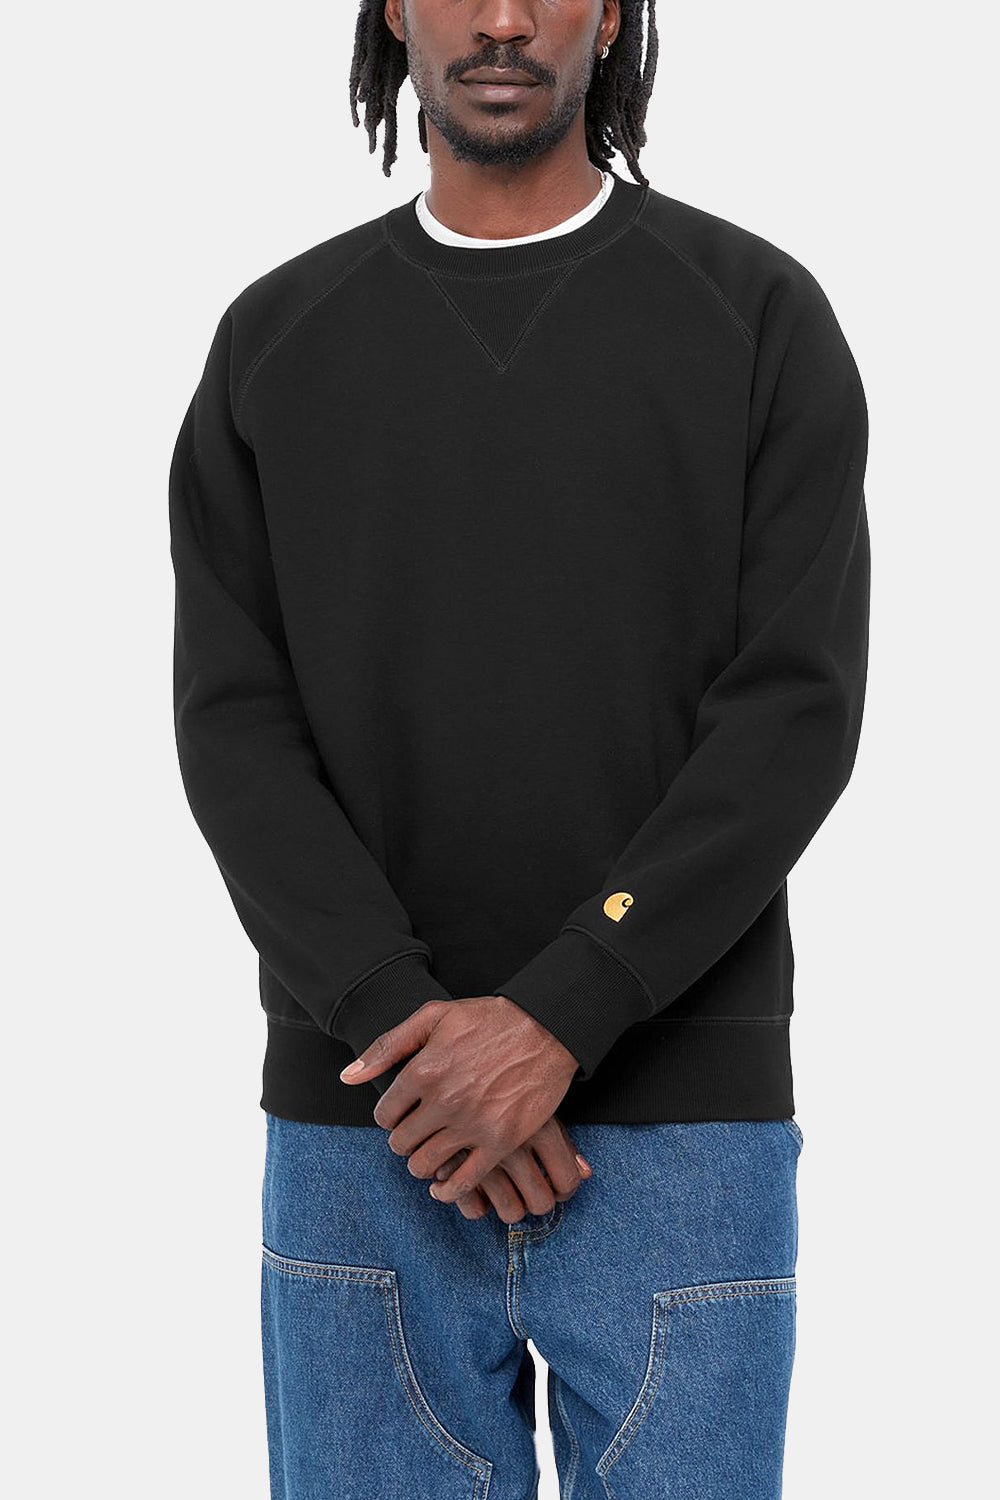 Carhartt WIP Chase Heavy Sweatshirt (Black & Gold)